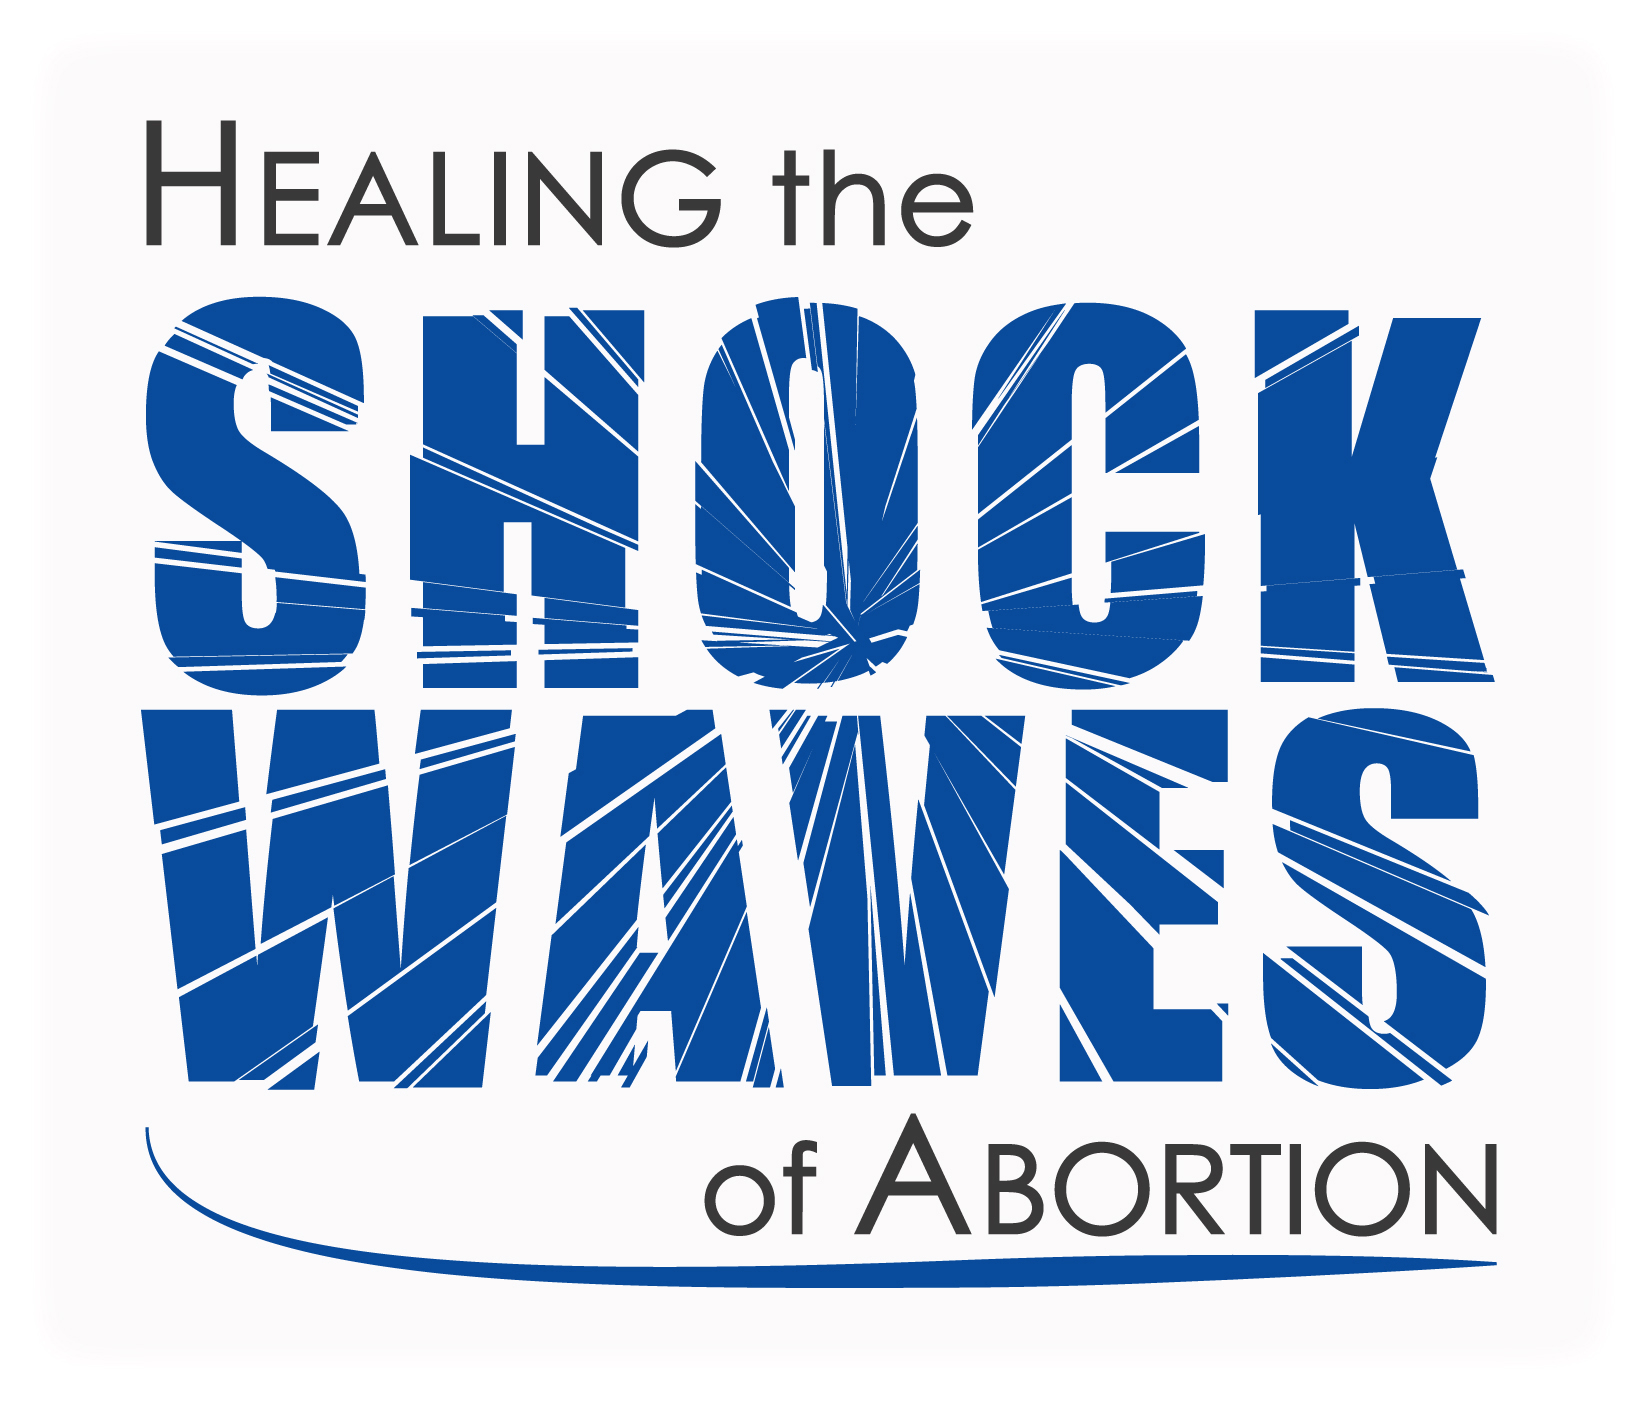 shockwaves of abortion logo